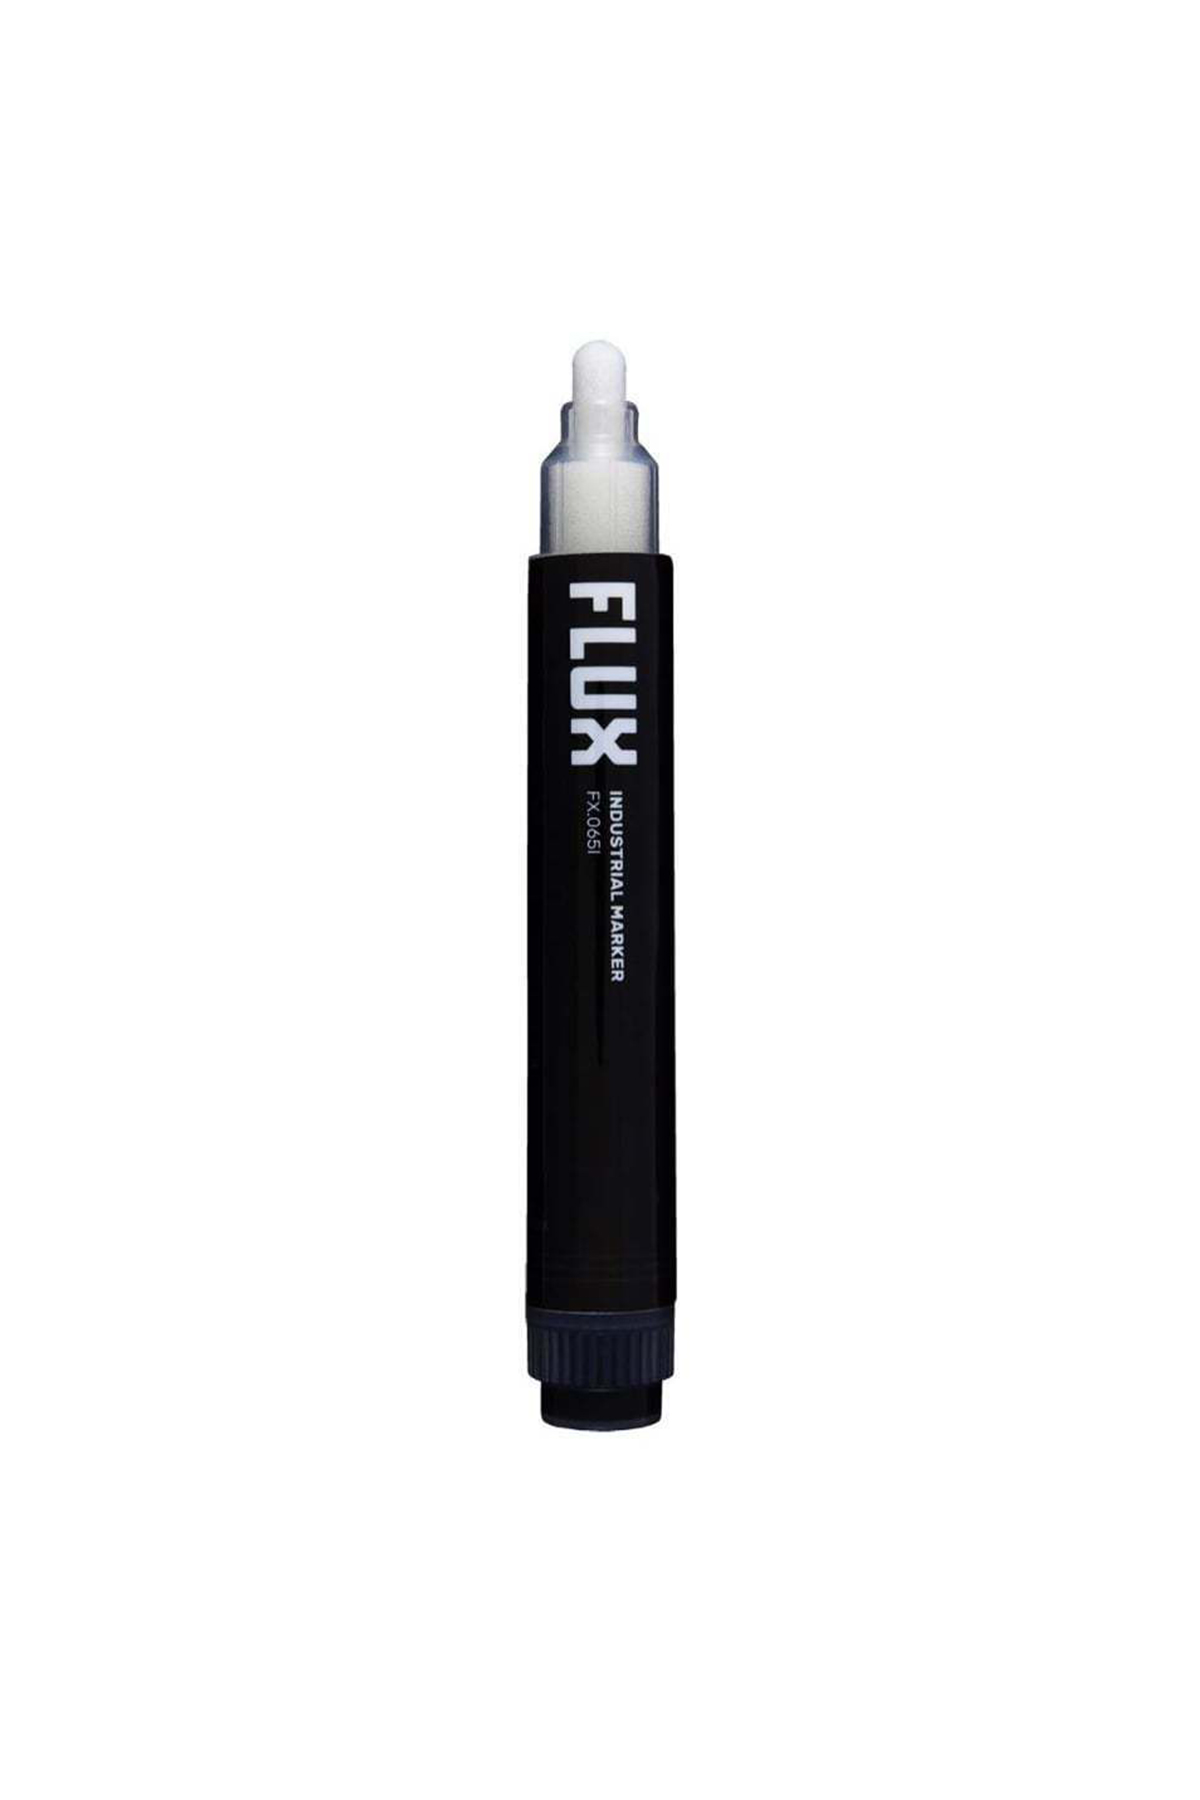 Flux INDUSTRIAL Marker 0.65mm